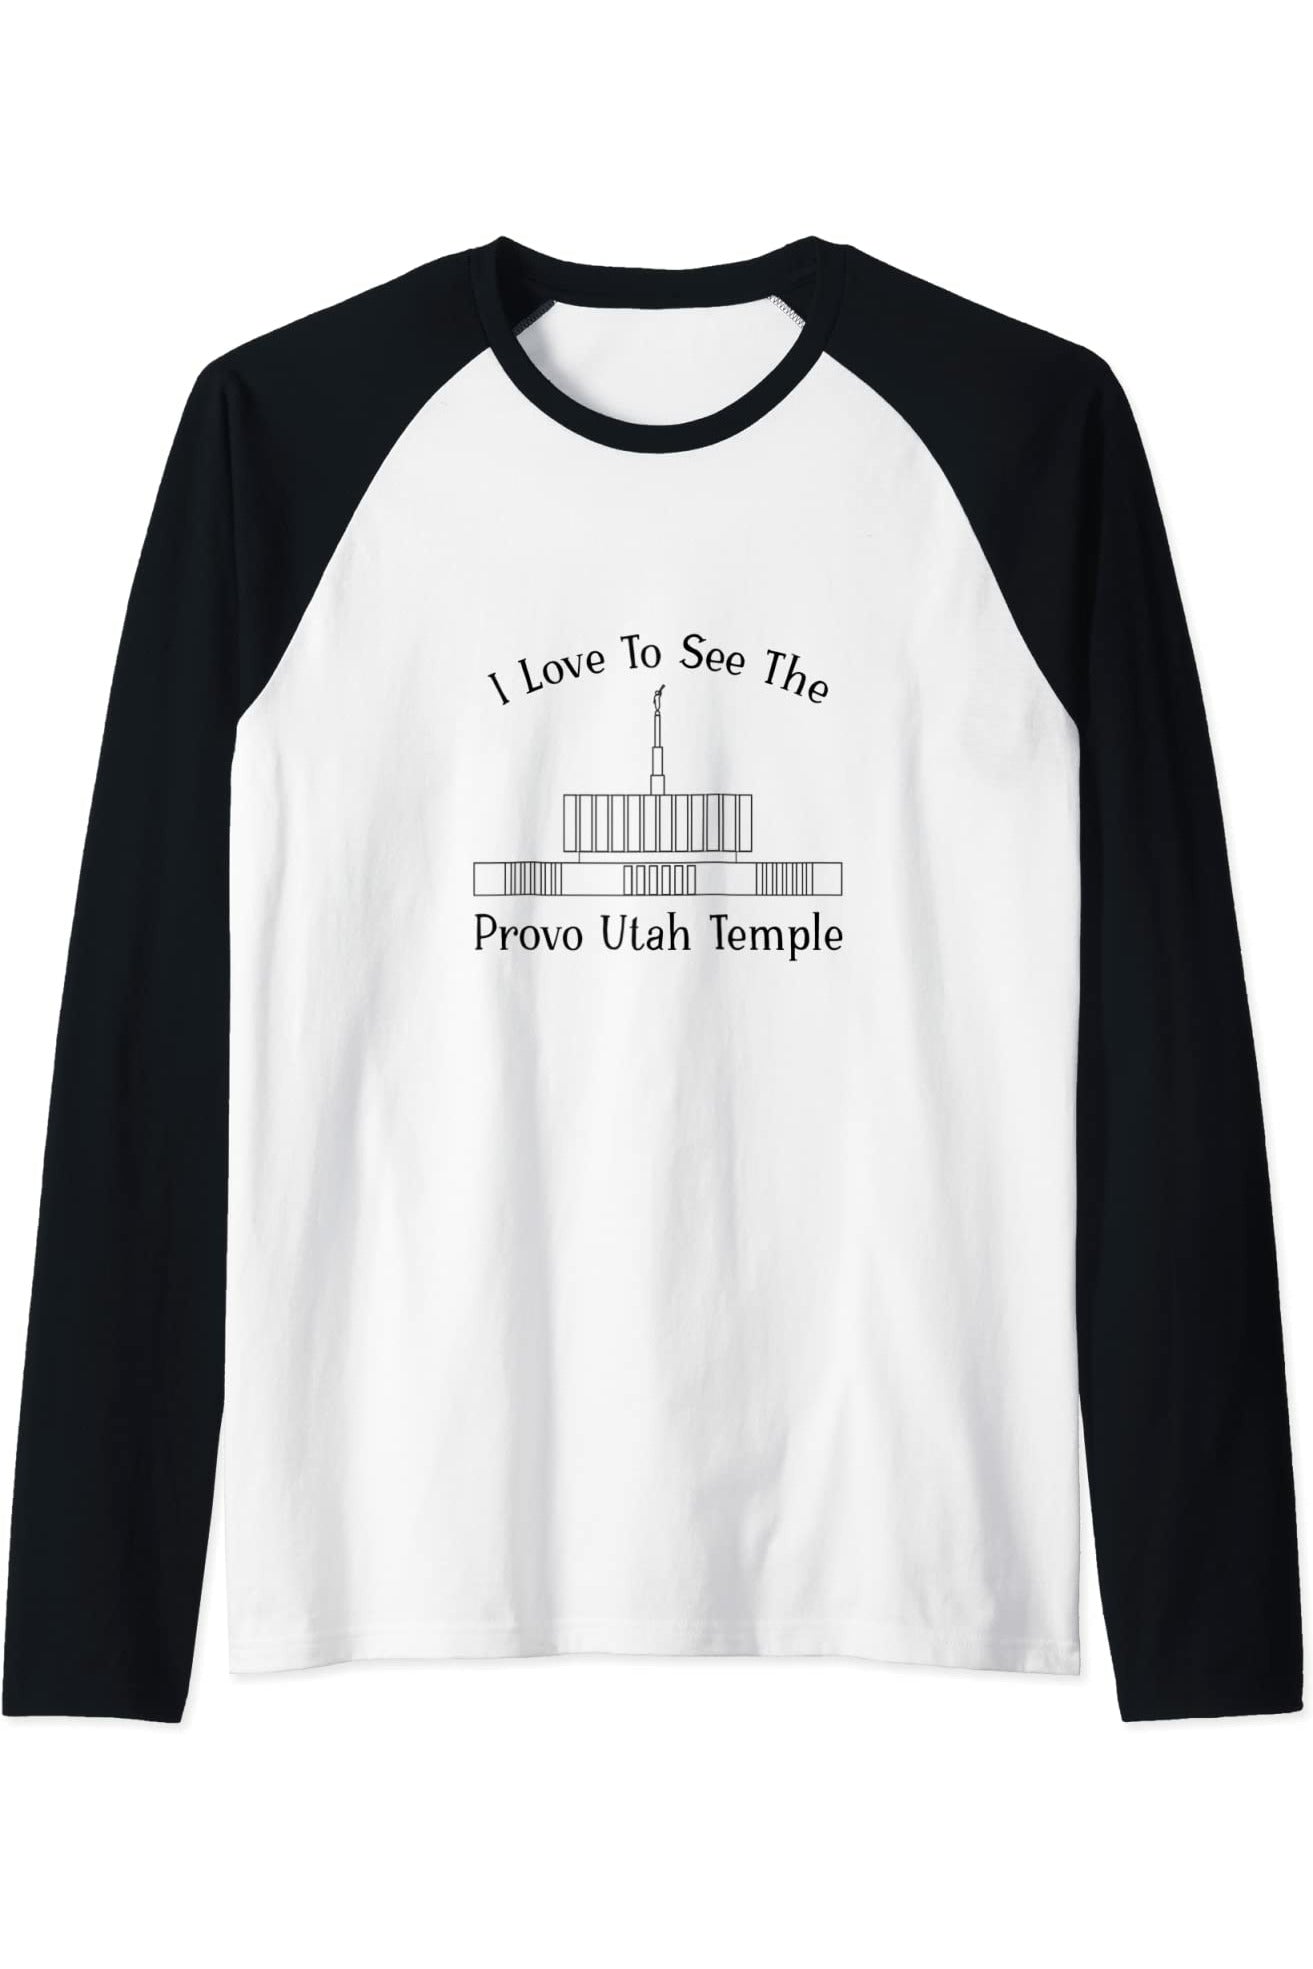 Provo Utah Temple Raglan - Happy Style (English) US